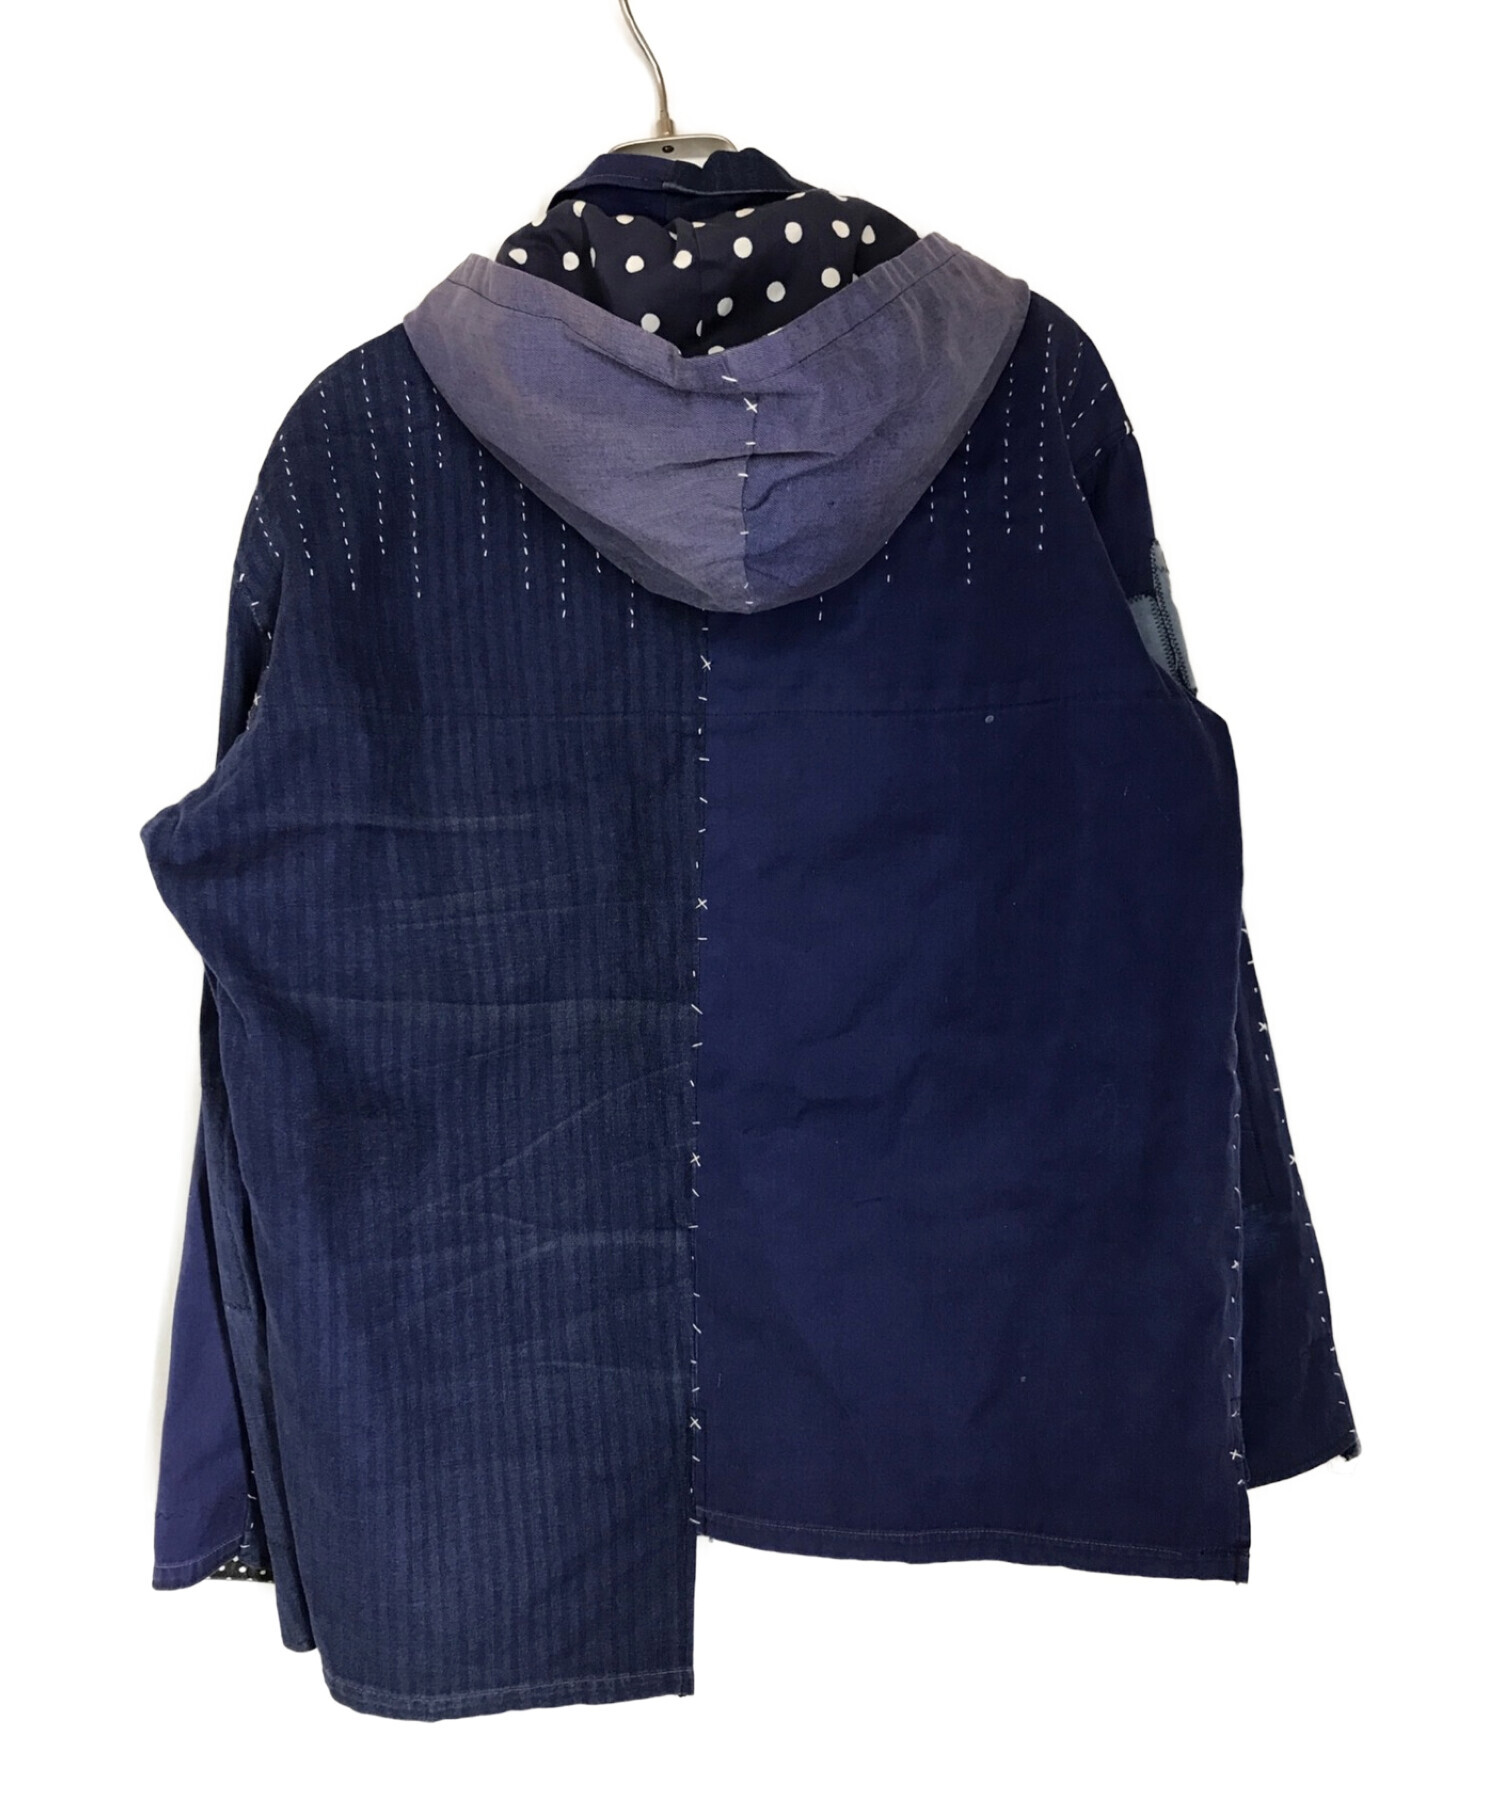 keisuke kanda (ケイスケカンダ) 手縫いパッチワークジャケット ブルー サイズ:不明(サイズ表記なし)